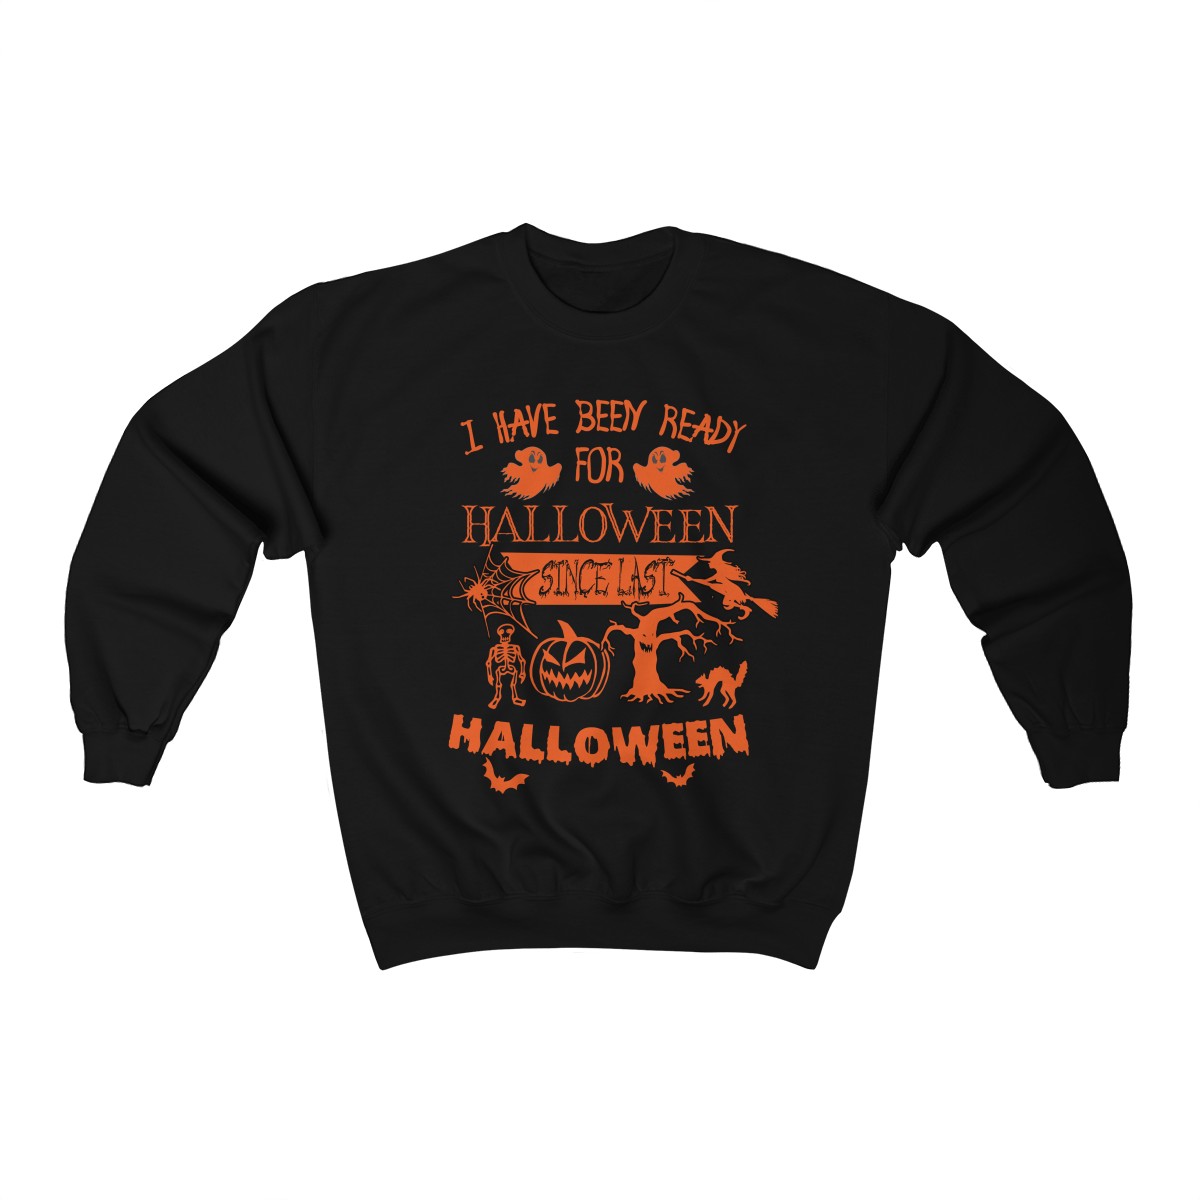 I Have Been Ready For Halloween Since Last Halloween Unisex T-Shirt, Sweatshirt, Hoodie